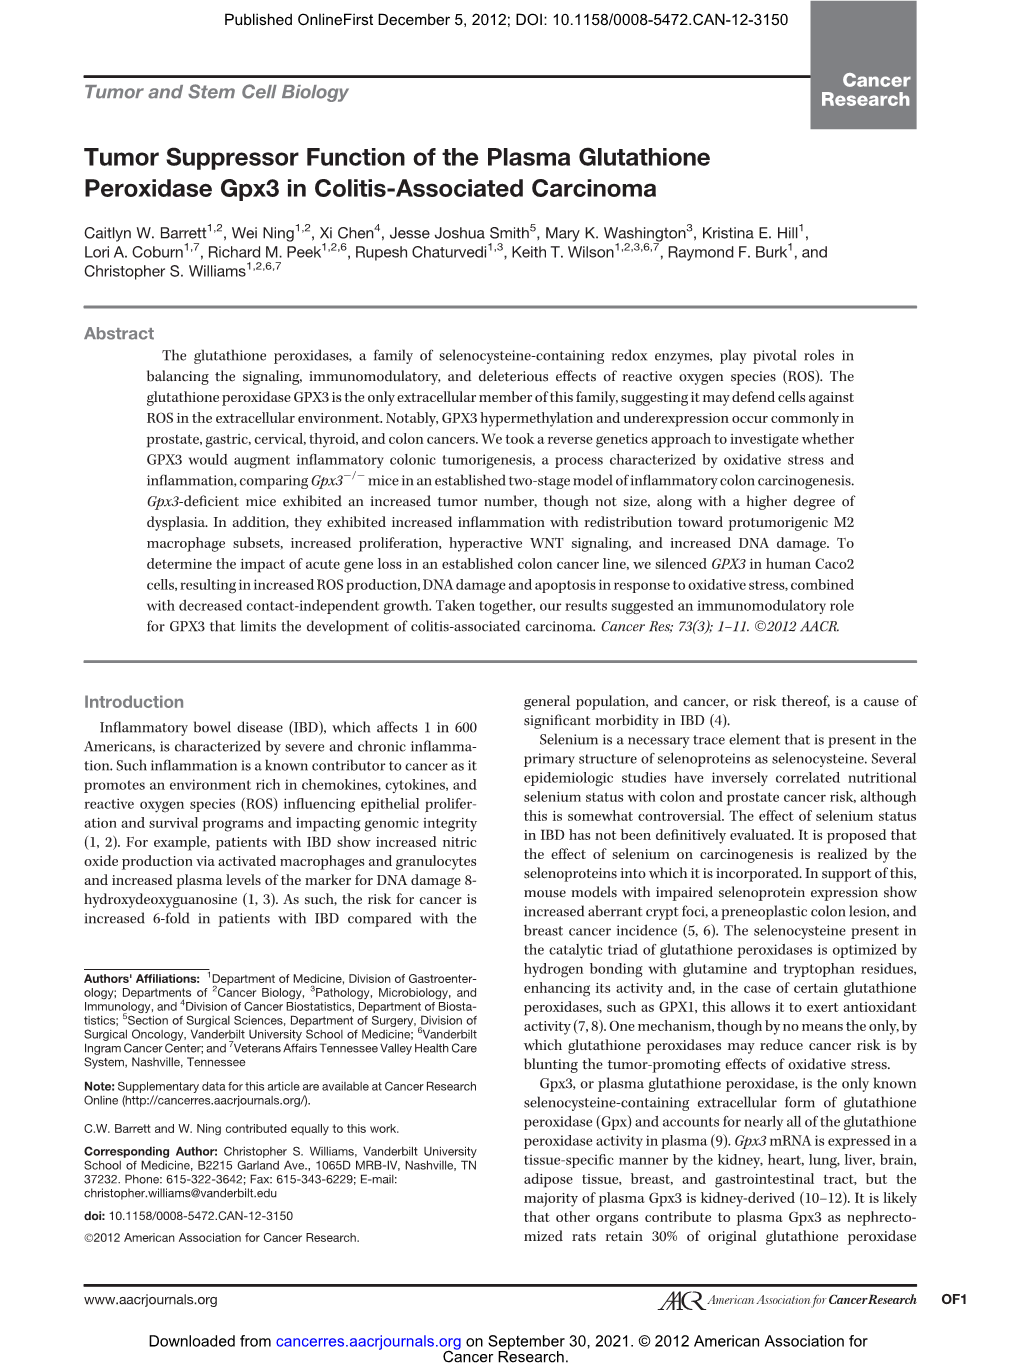 Tumor Suppressor Function of the Plasma Glutathione Peroxidase Gpx3 in Colitis-Associated Carcinoma